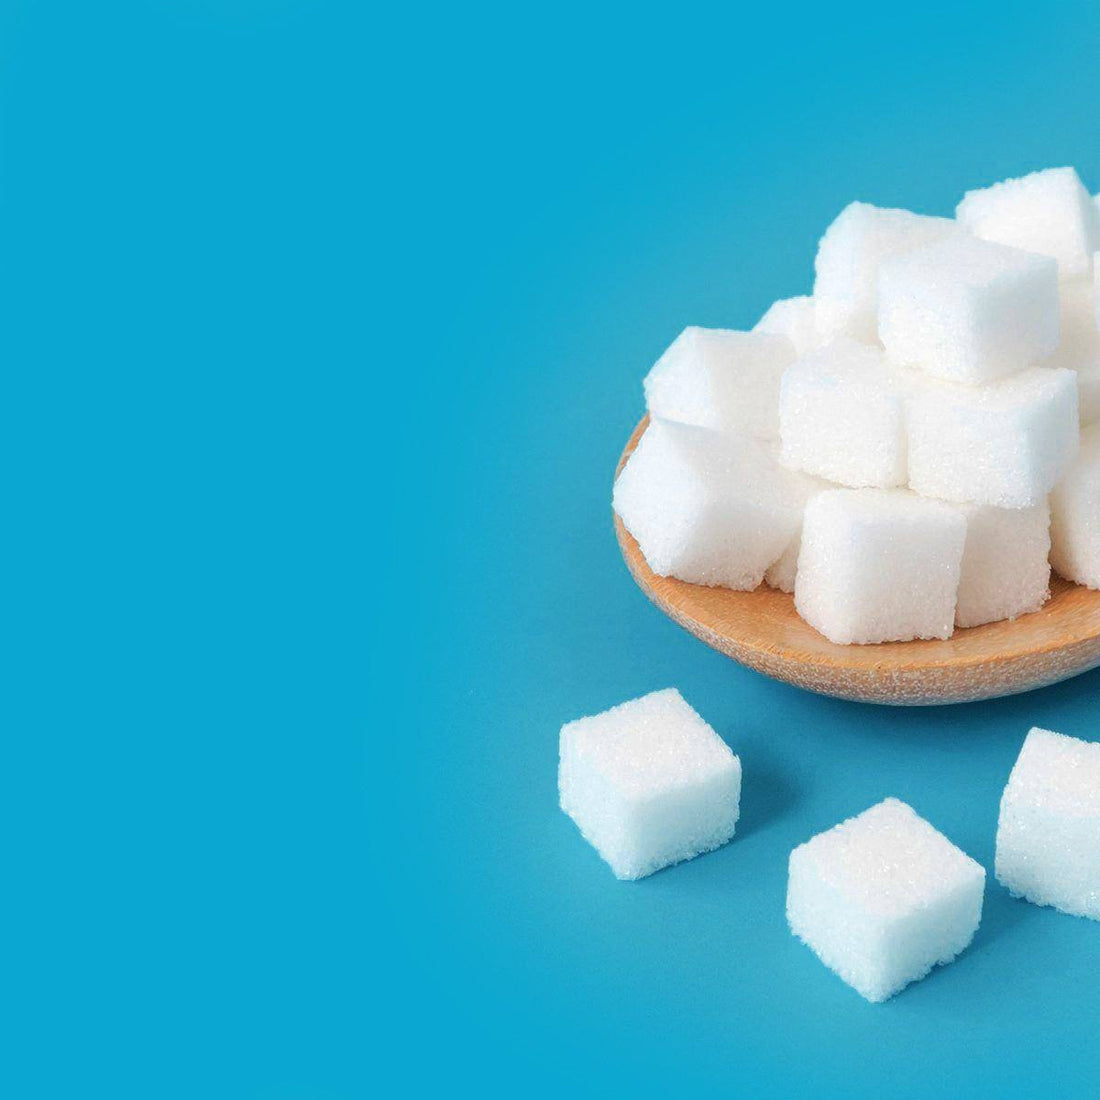 6 Benefits of a Low-Sugar Diet